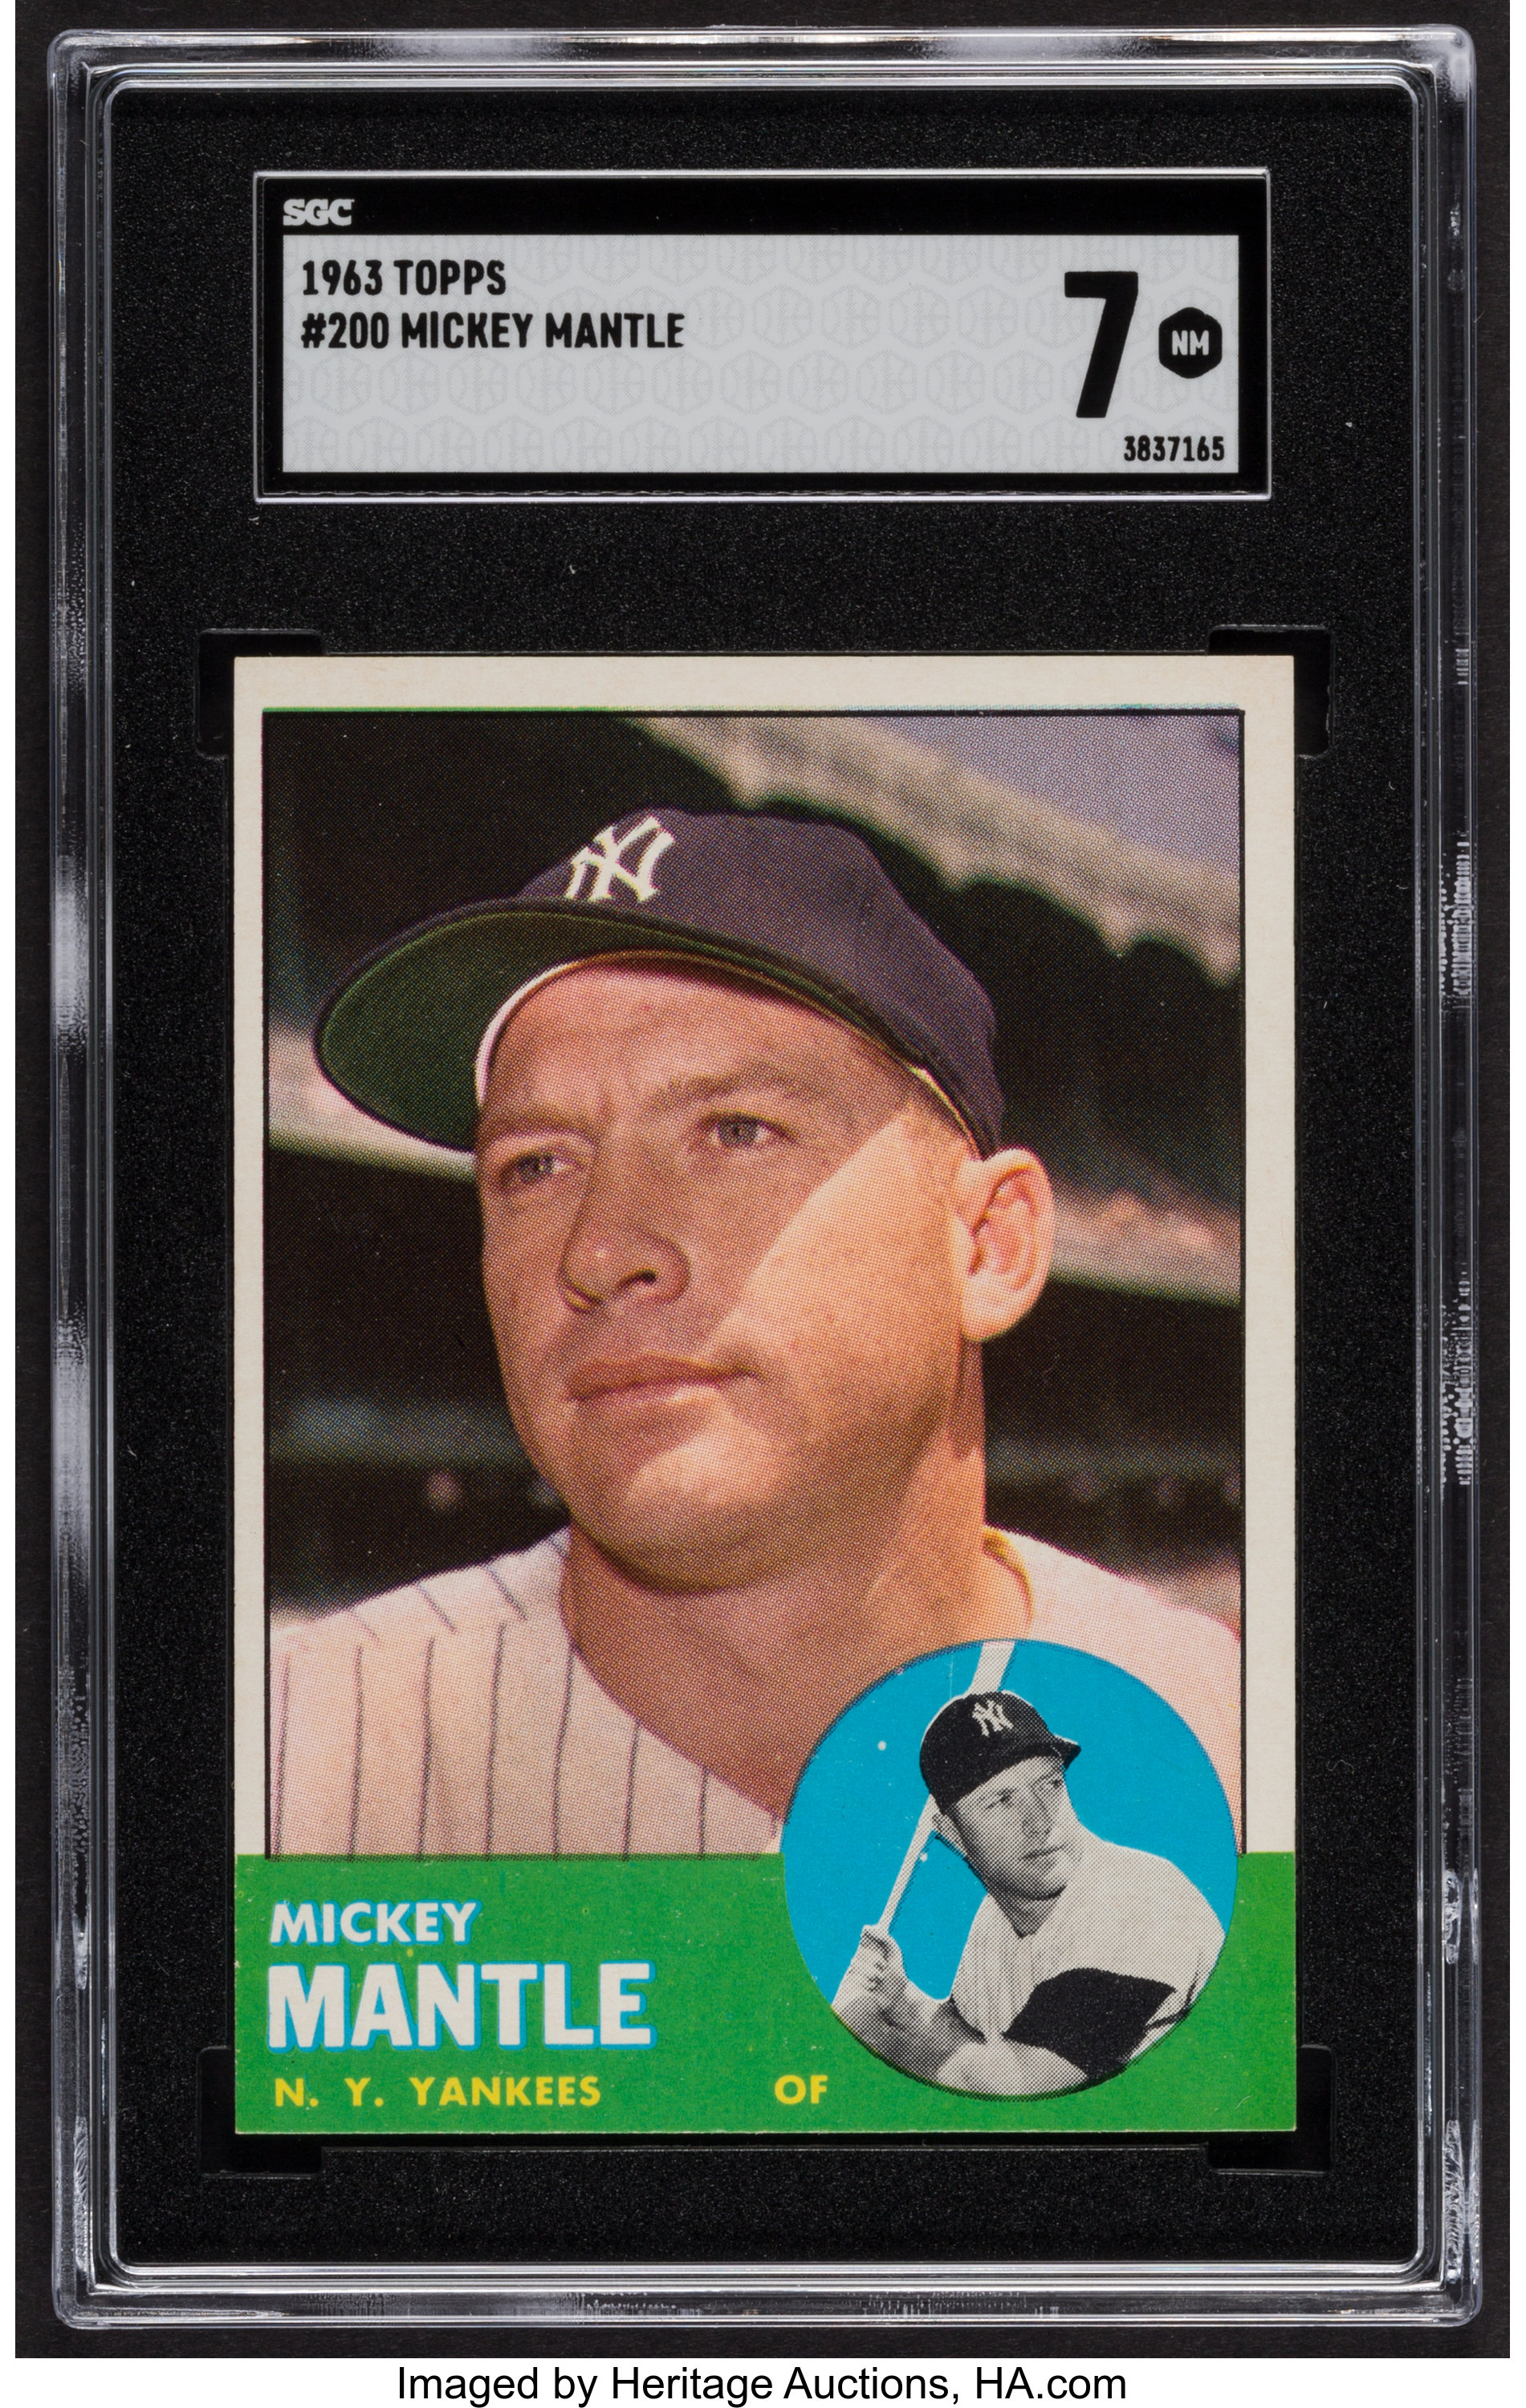 Mickey Mantle 1963 Topps Baseball Card #200